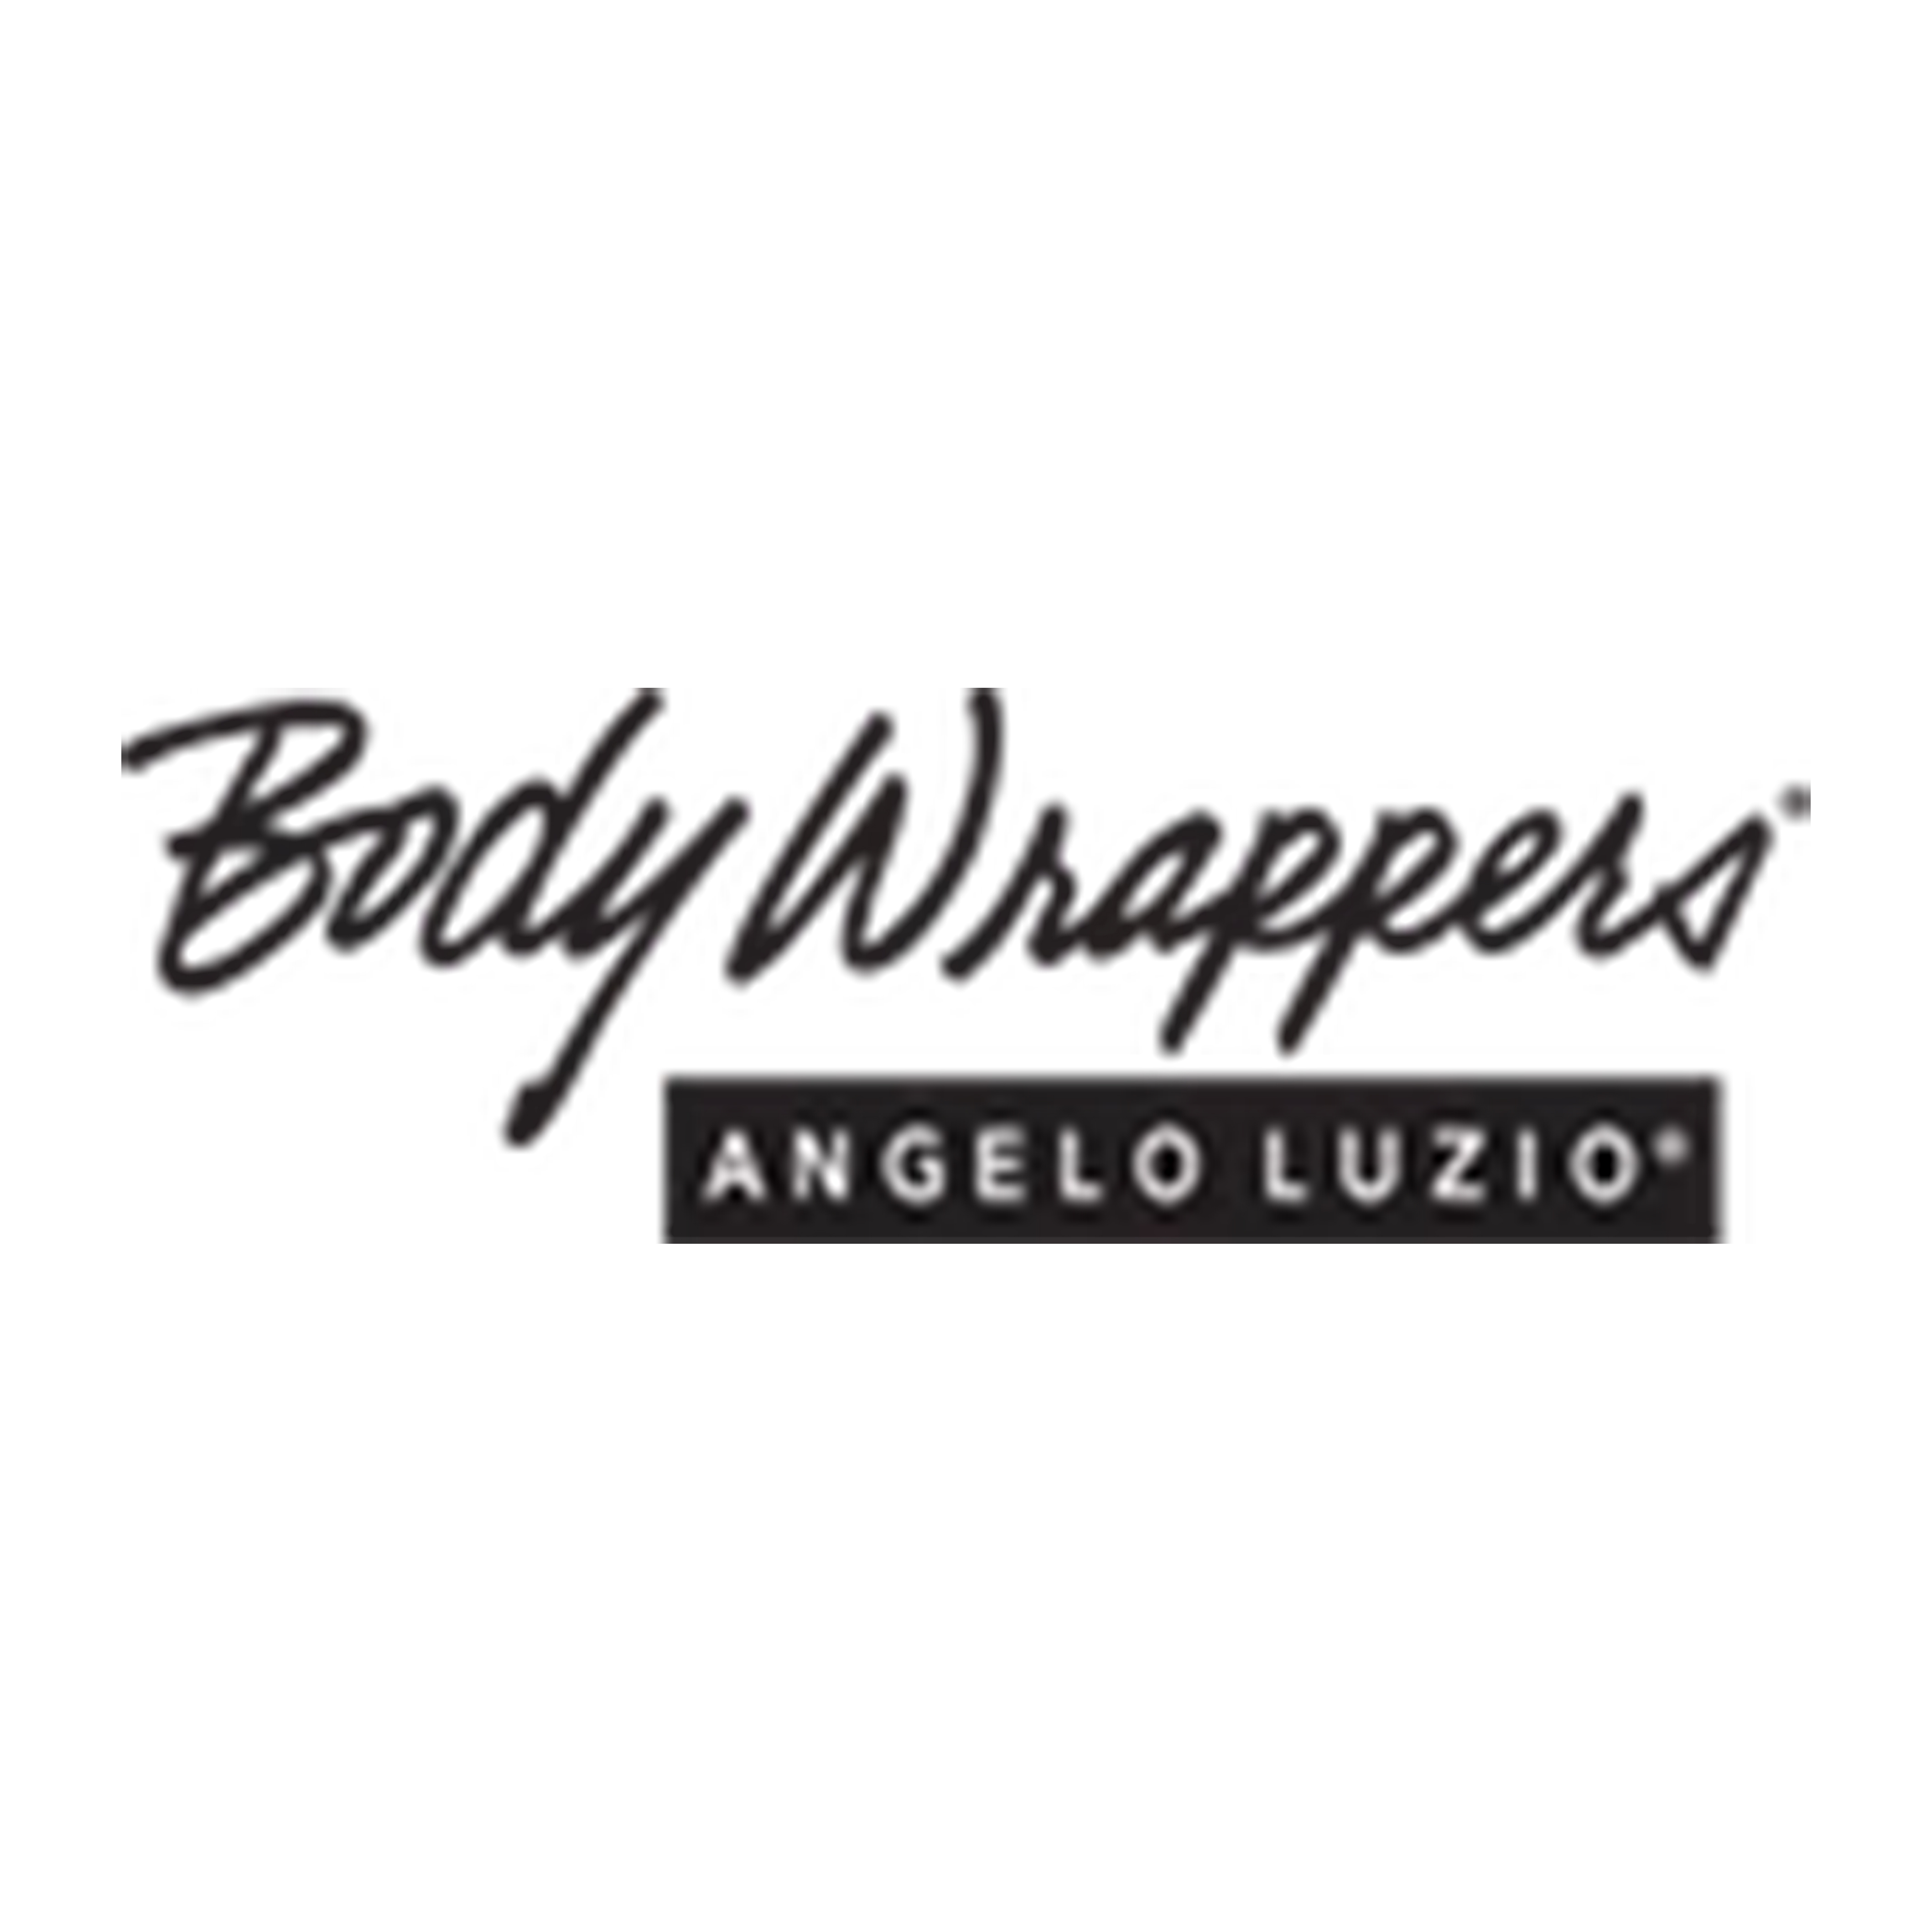 Body Wrappers logo